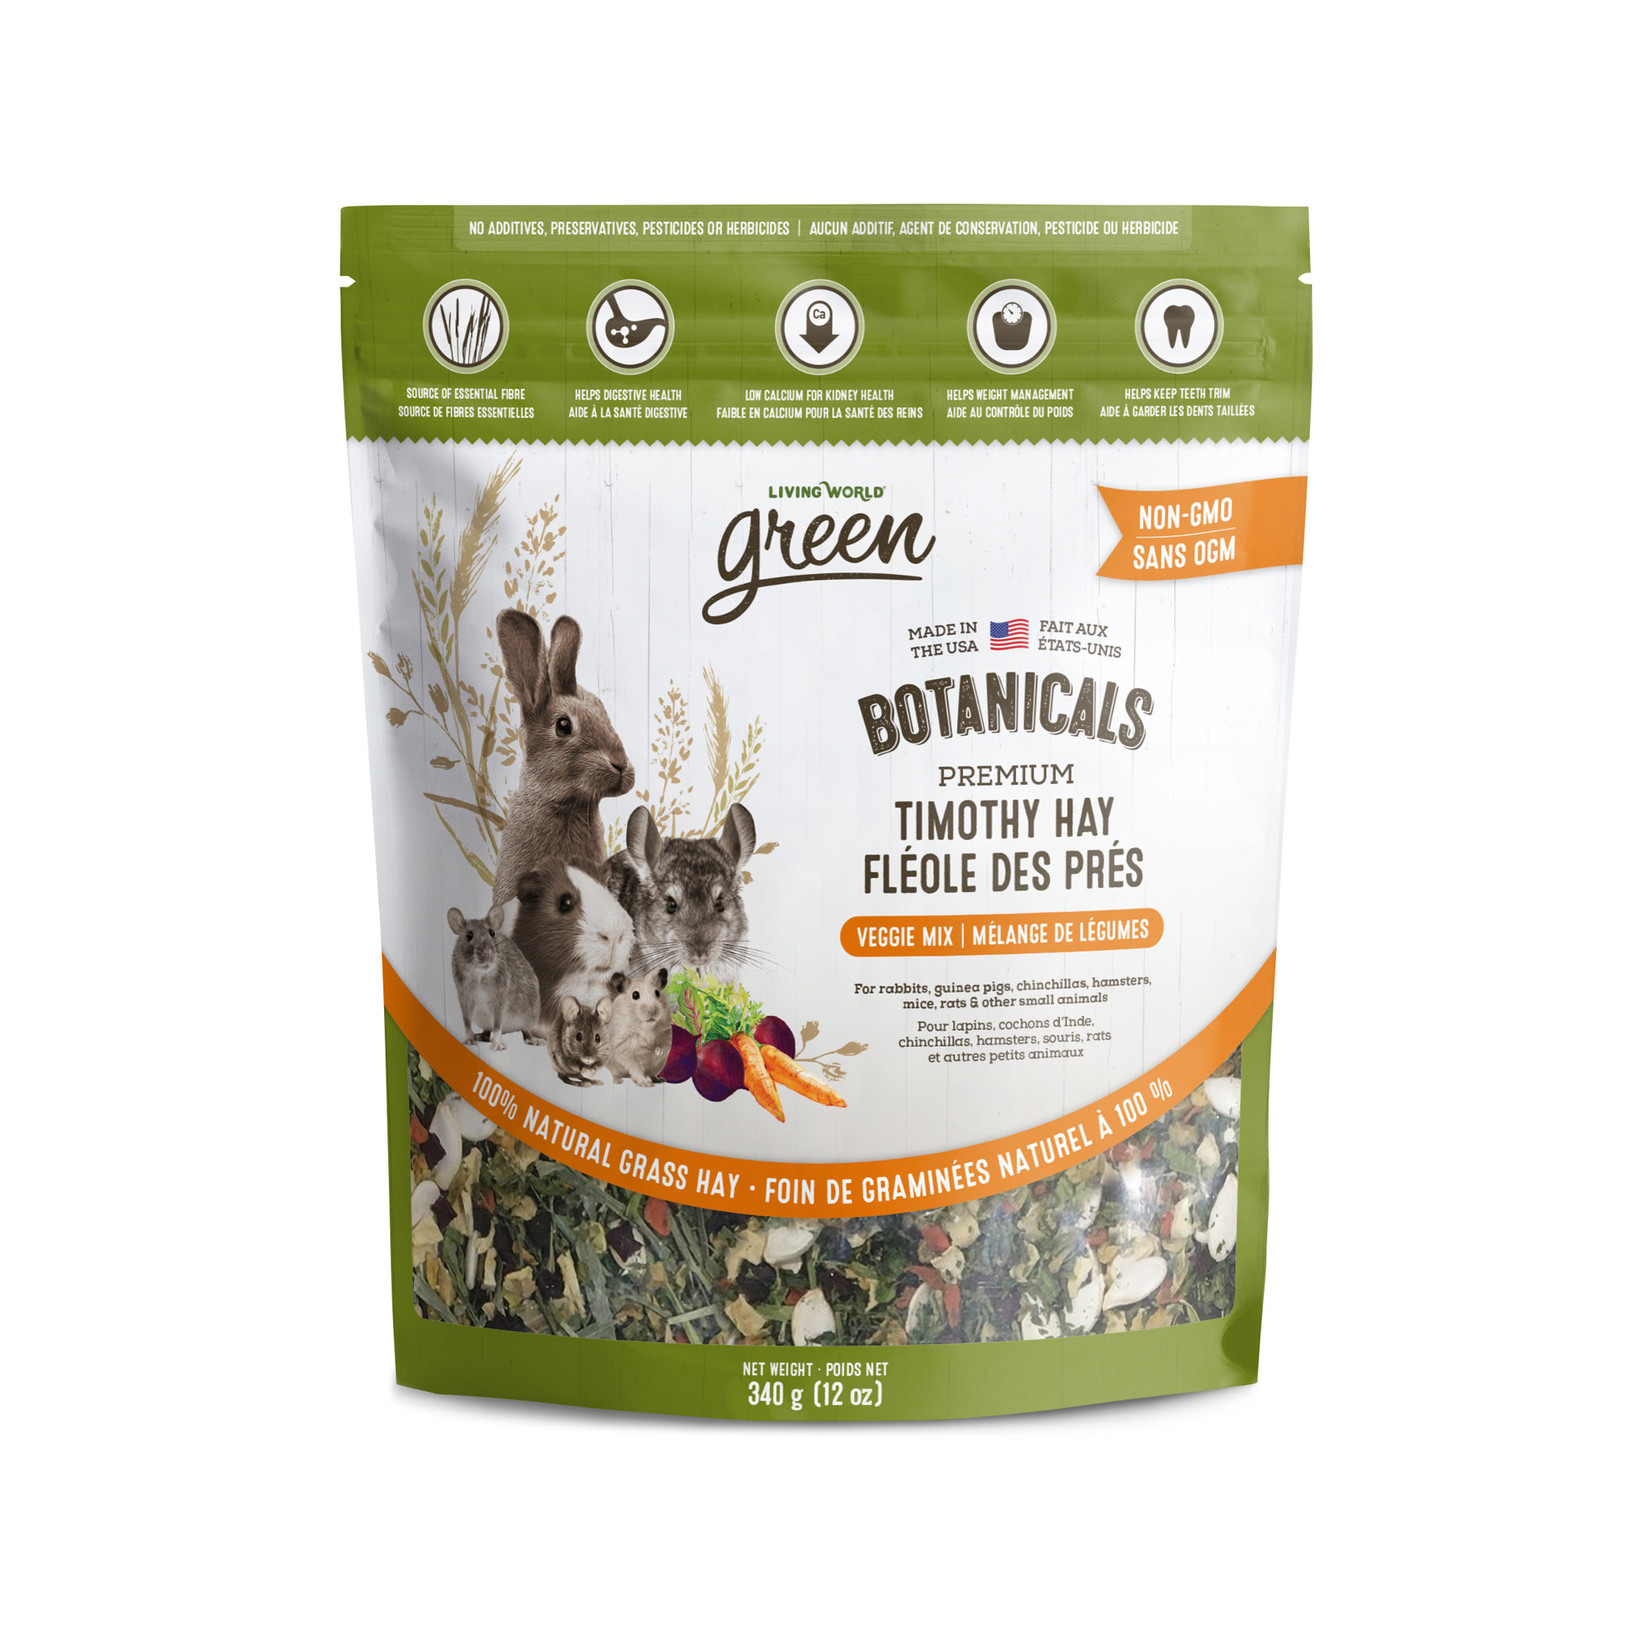 LIVING WORLD Living World Green Botanicals Premium Timothy Hay - Veggie Mix - 340 g (12 oz)